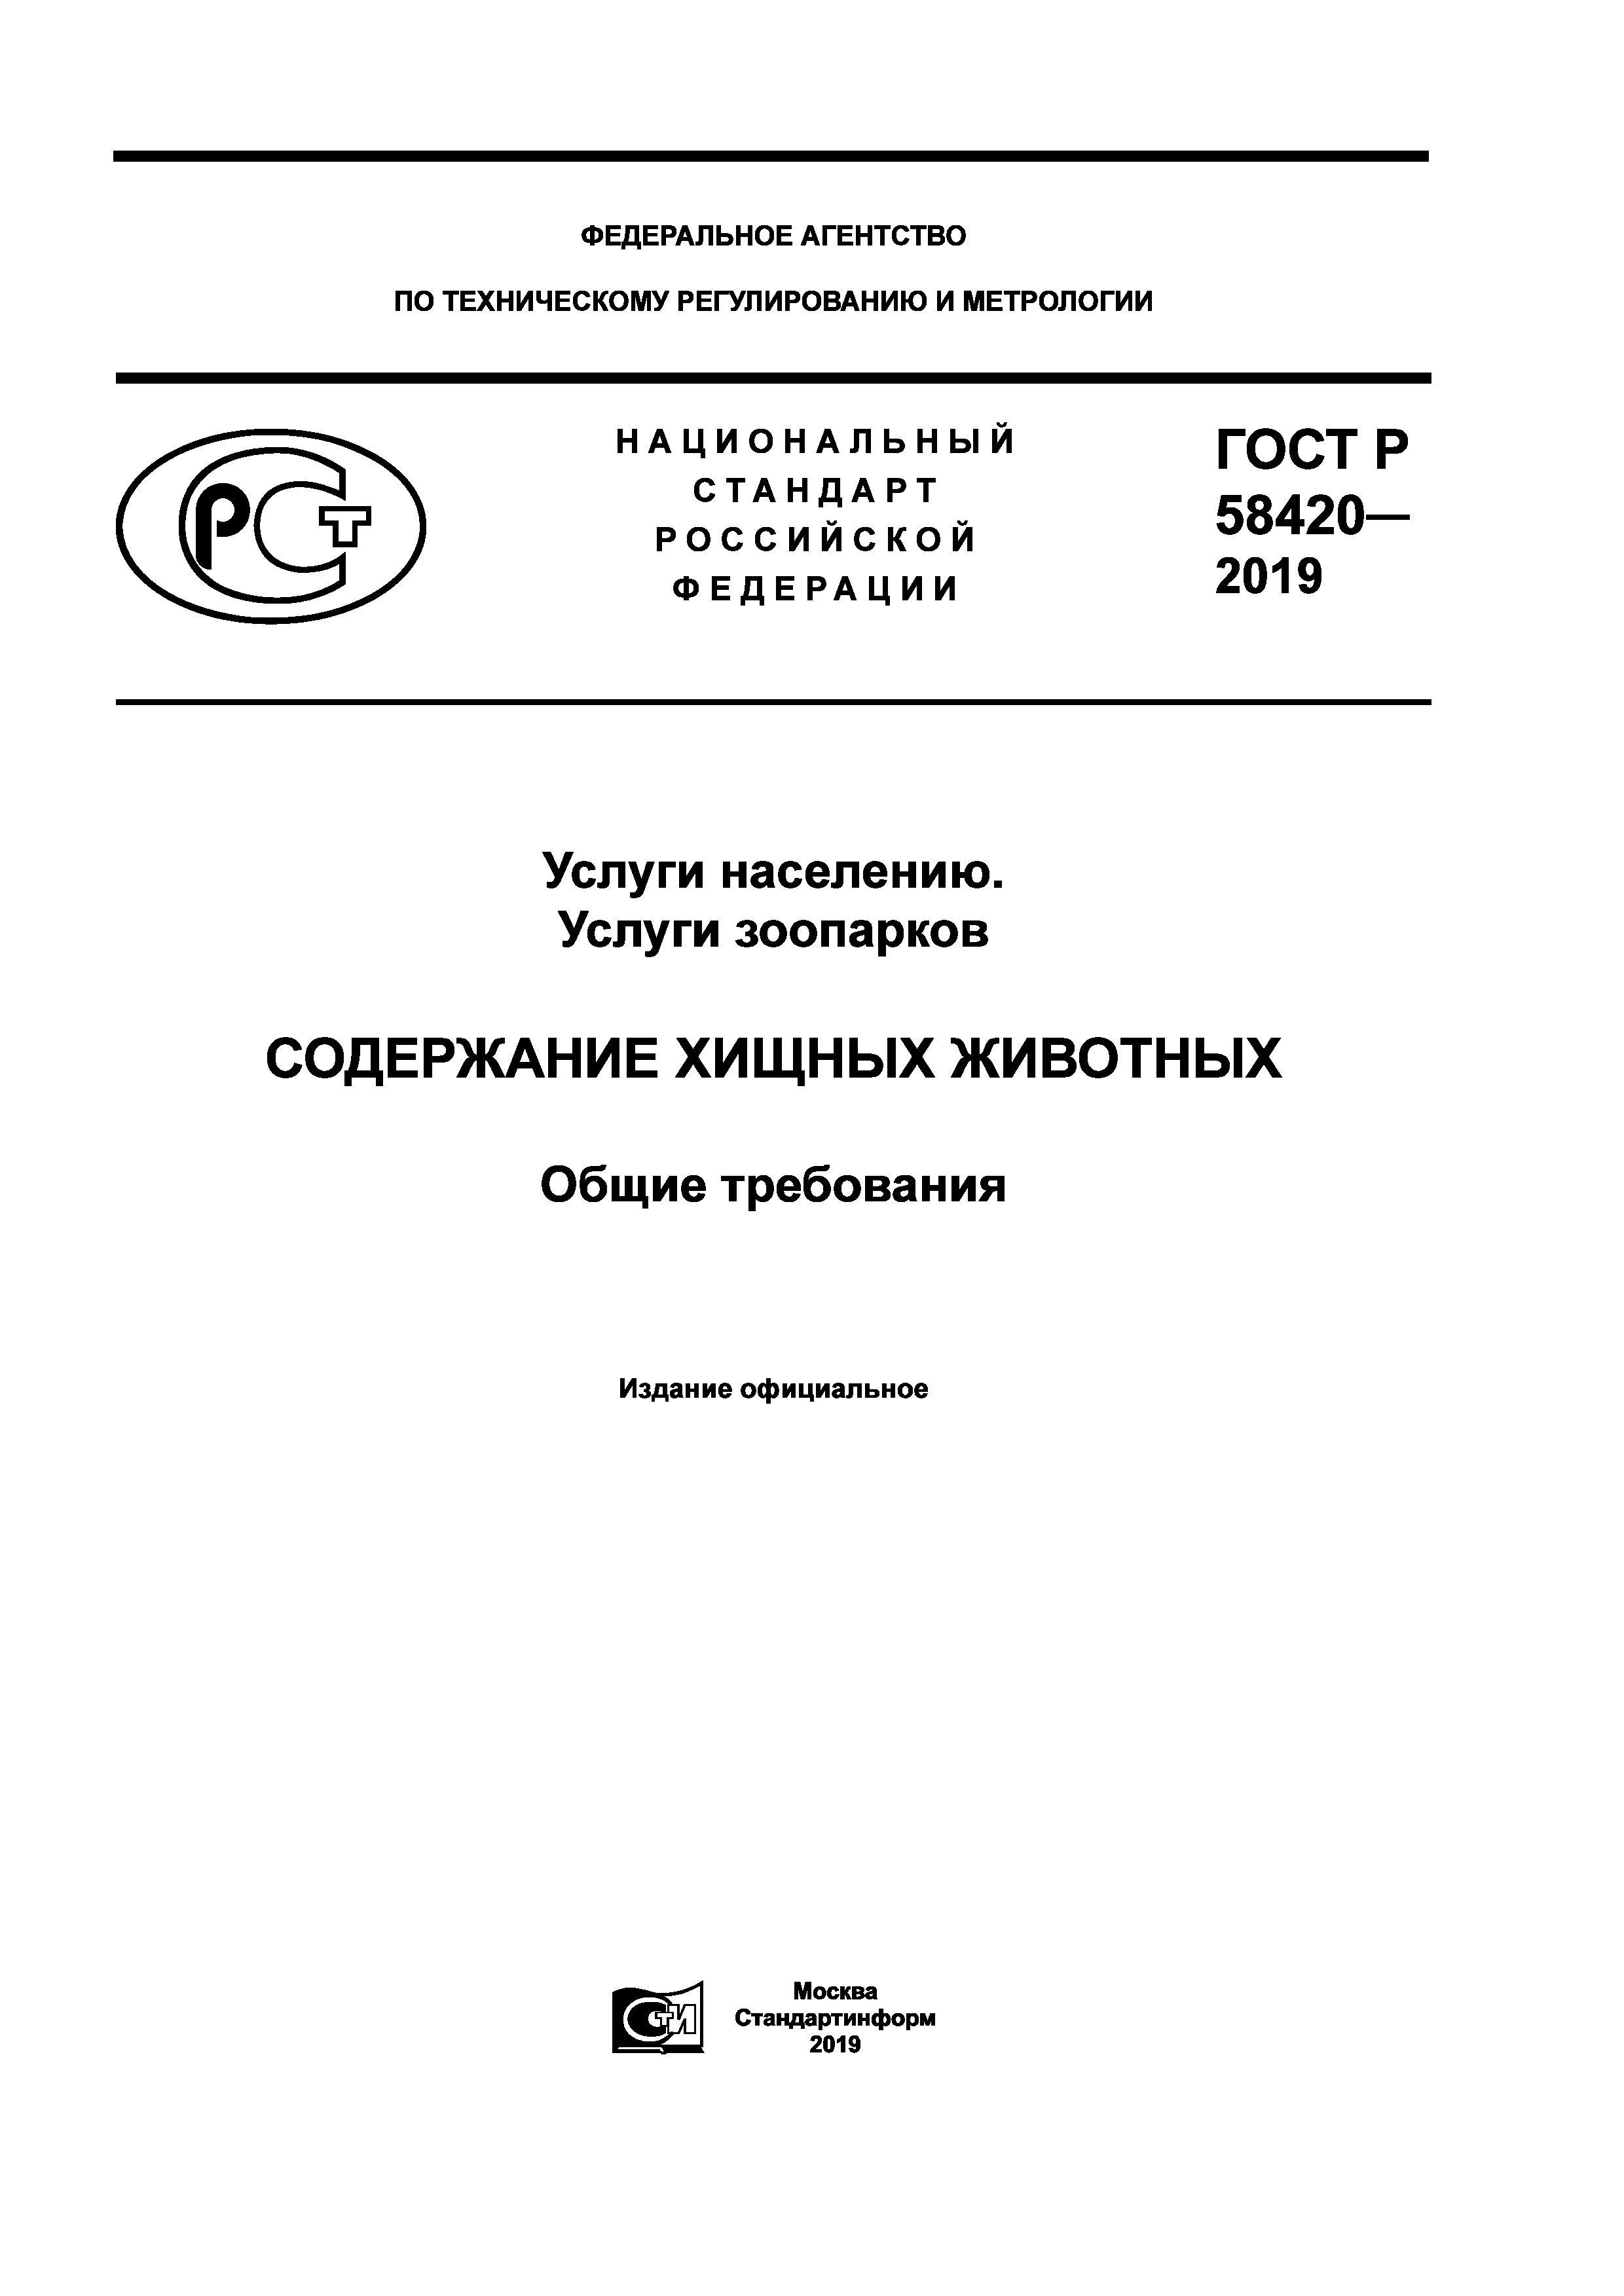 ГОСТ Р 58420-2019